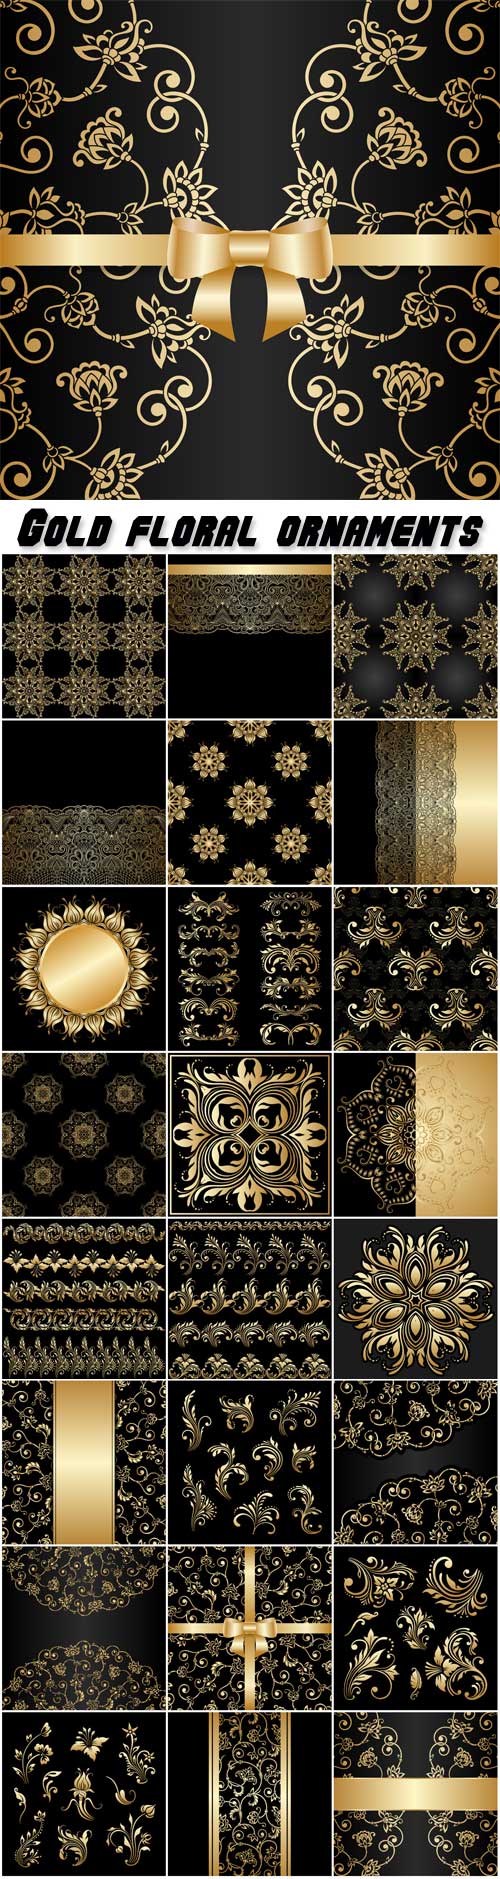 Gold floral ornaments, vector black background